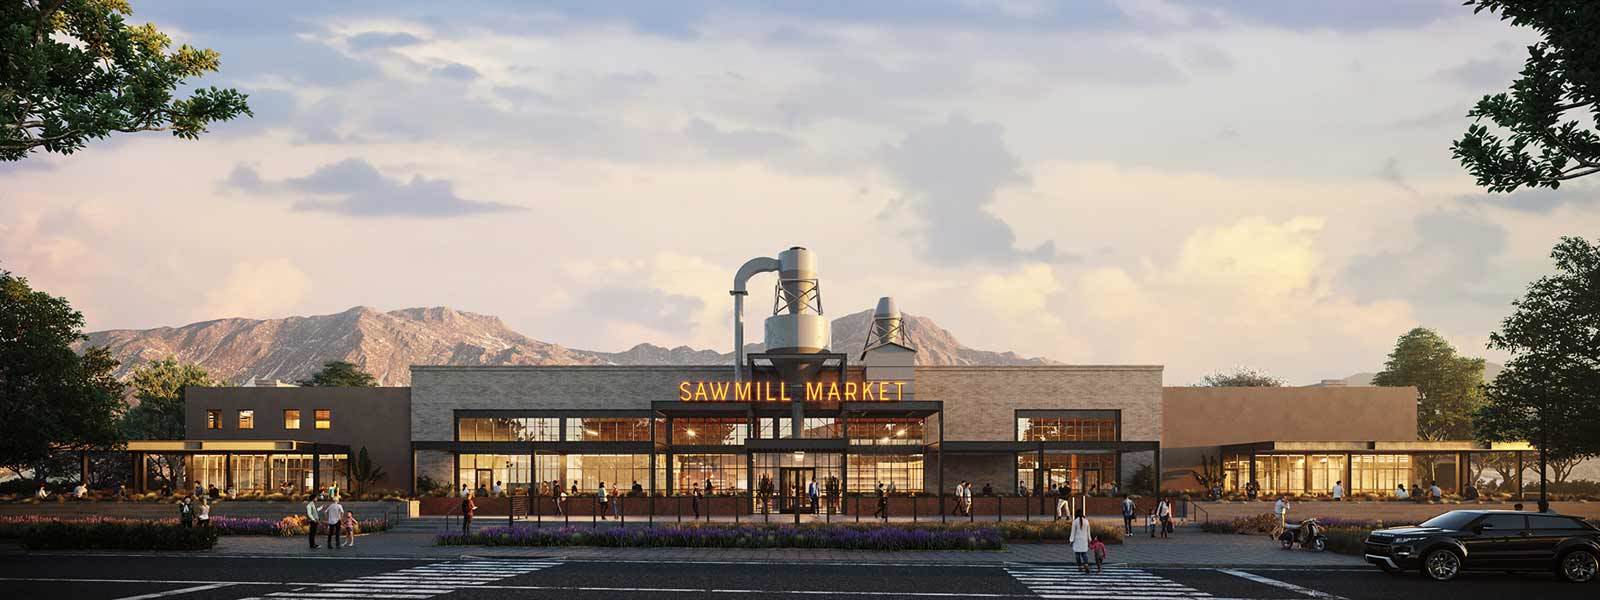 Photo of Sawmill Market, Albuquerque, NM